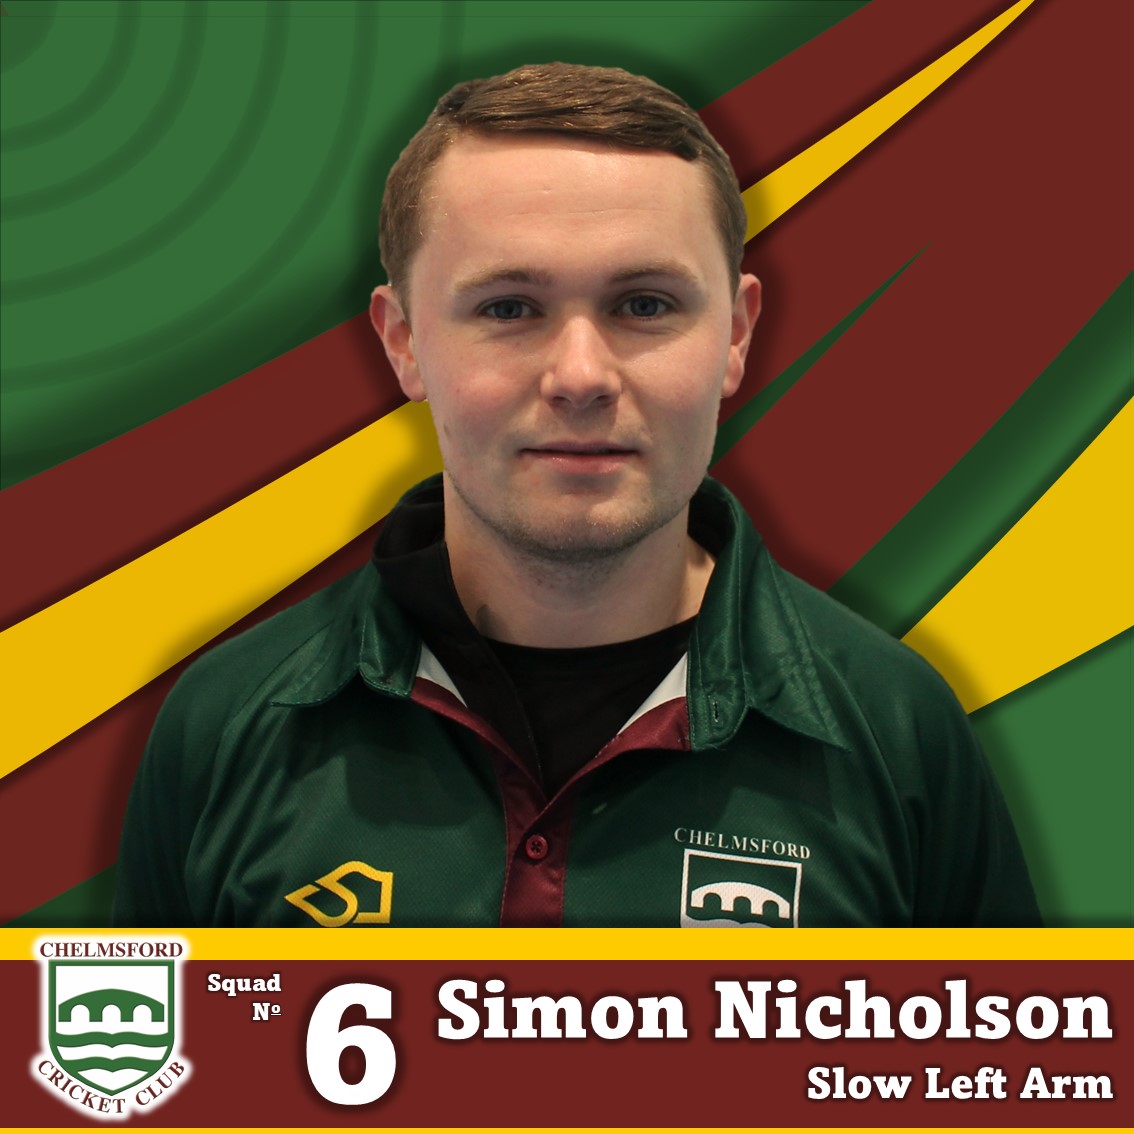 Simon Nicholson